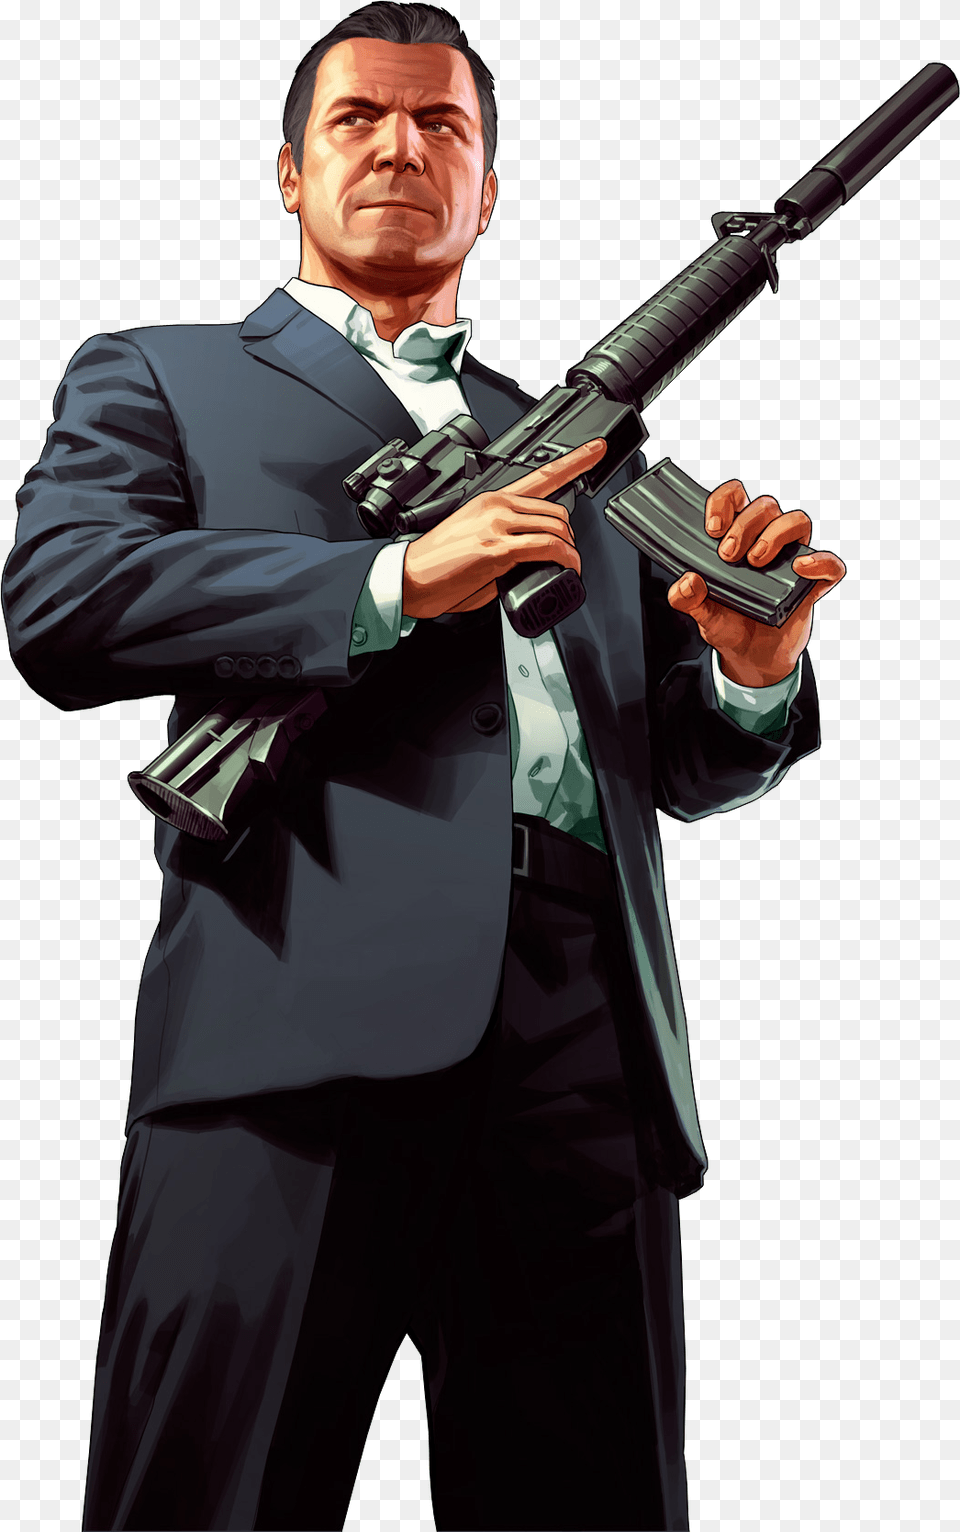 Gta 5 Michael, Weapon, Clothing, Suit, Firearm Png Image